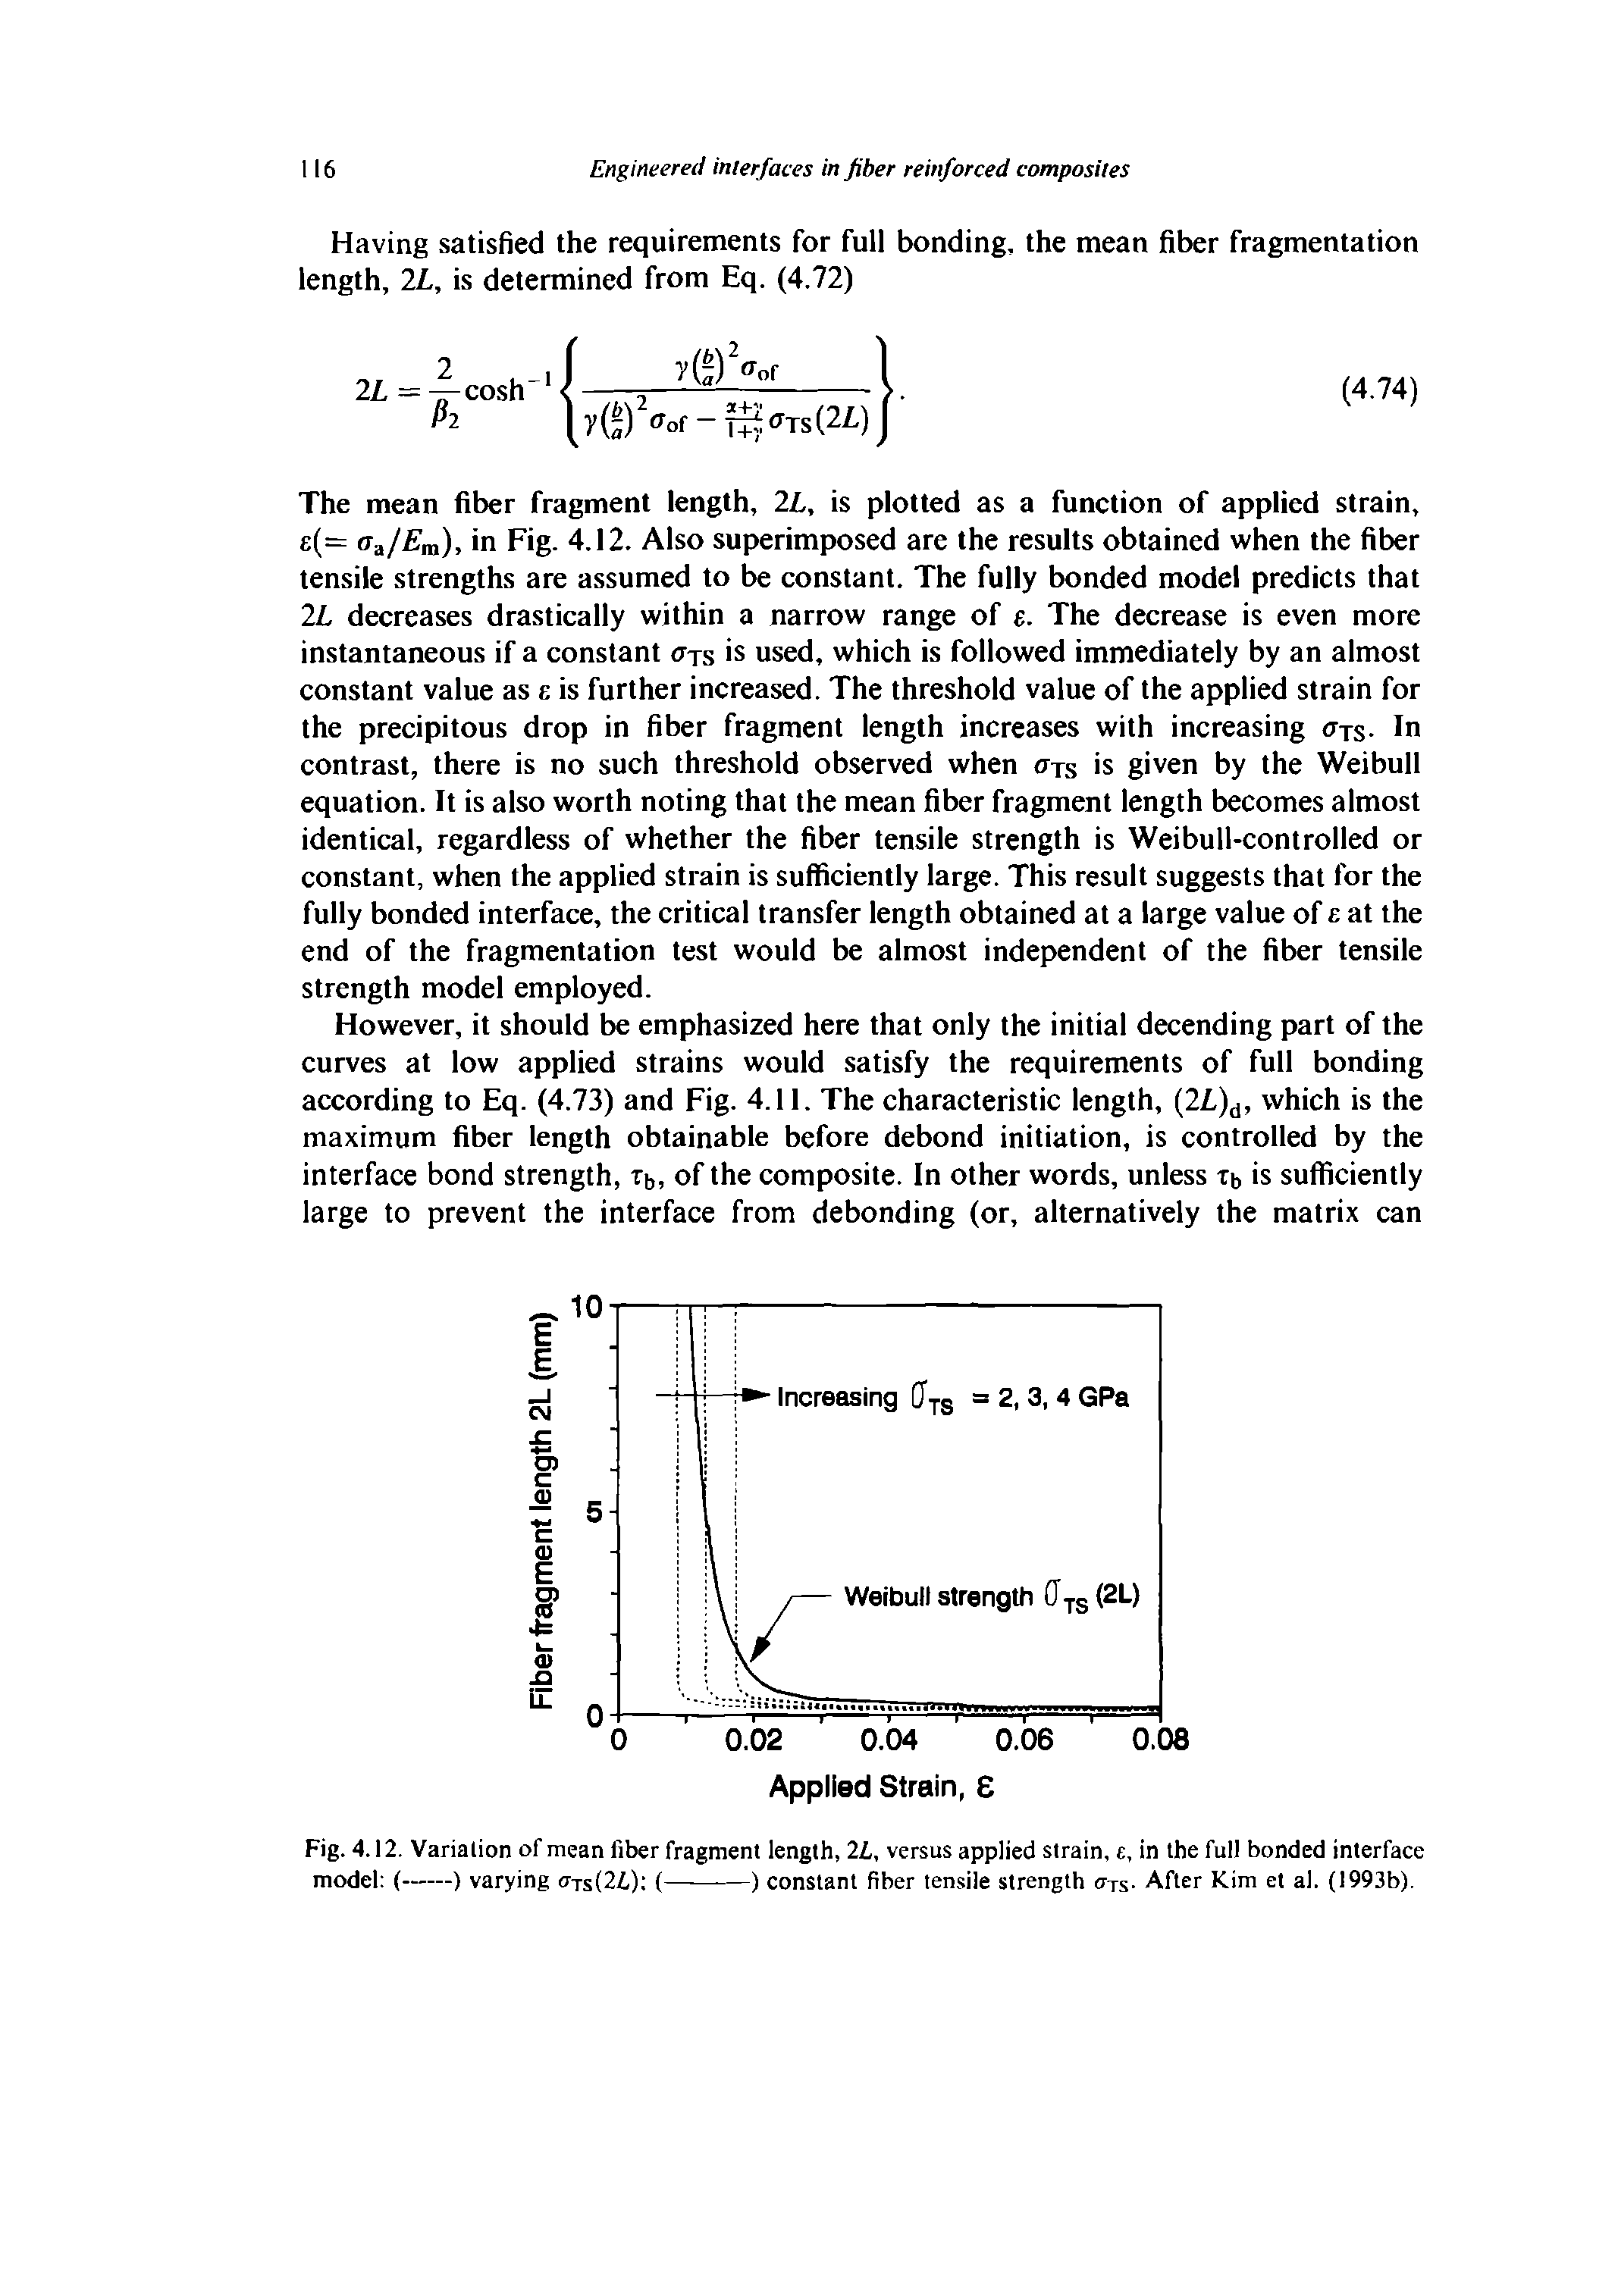 Fig. 4.12. Varialion of mean fiber fragment length, 2L, versus applied strain, t, in the full bonded interface model (---------) varying ctts(22,) (------------) constant fiber tensile strength ctts- After Kim et al. (1993b).